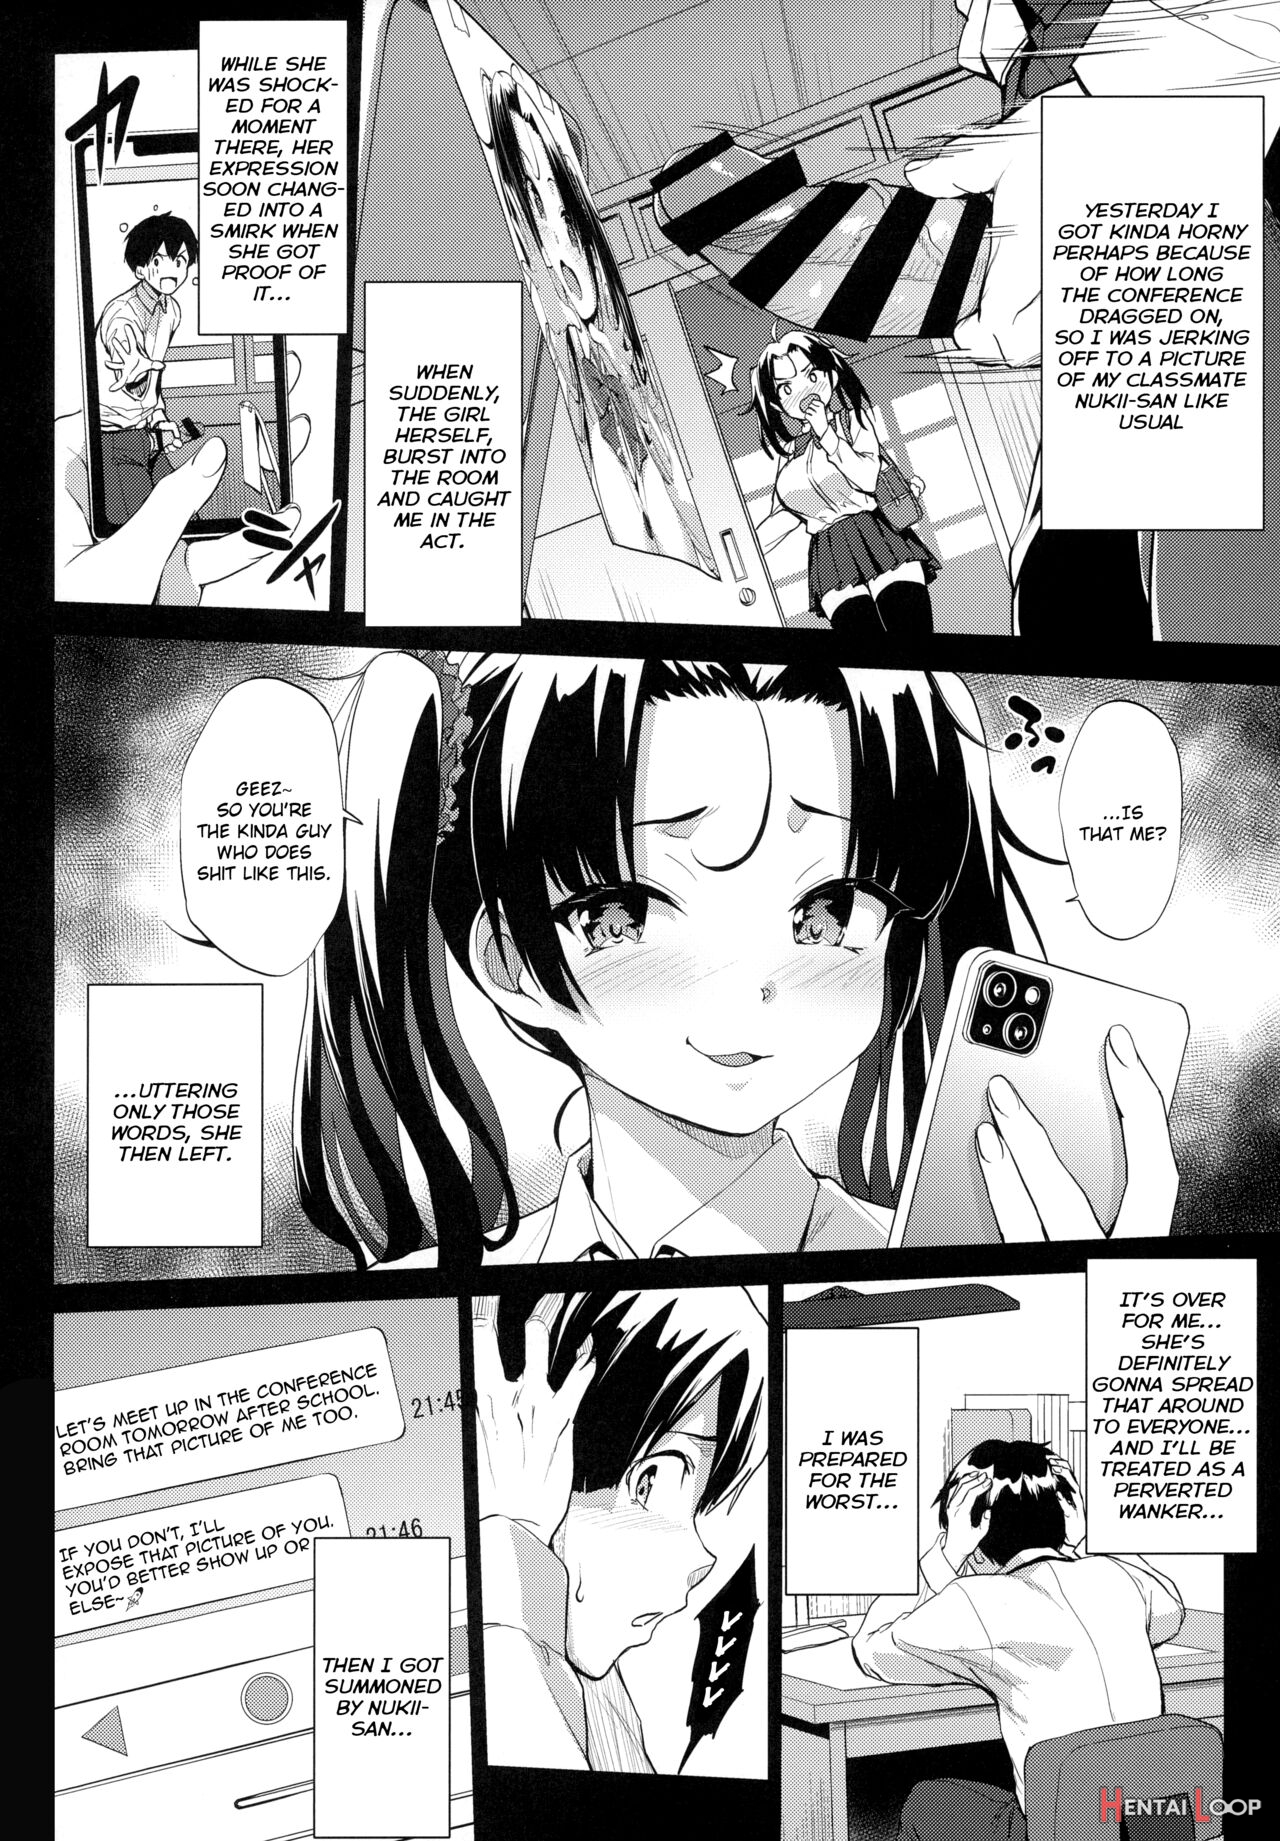 A Chance To Fap To Nukii-san page 5